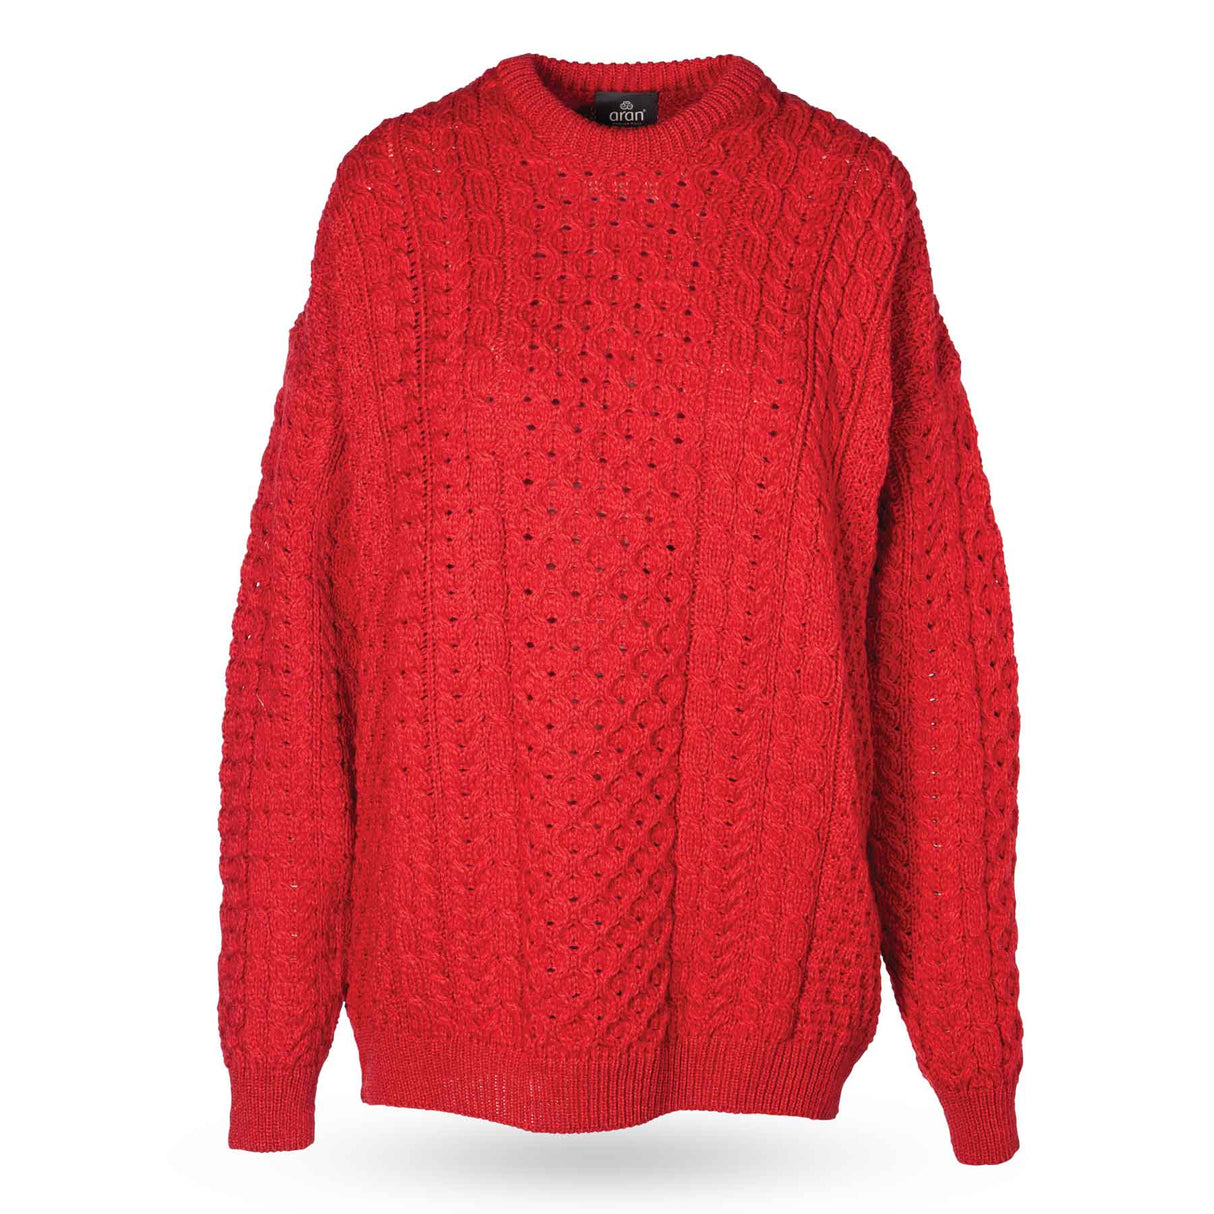 Classic Aran Knit Crewneck Sweater, Red - Creative Irish Gifts